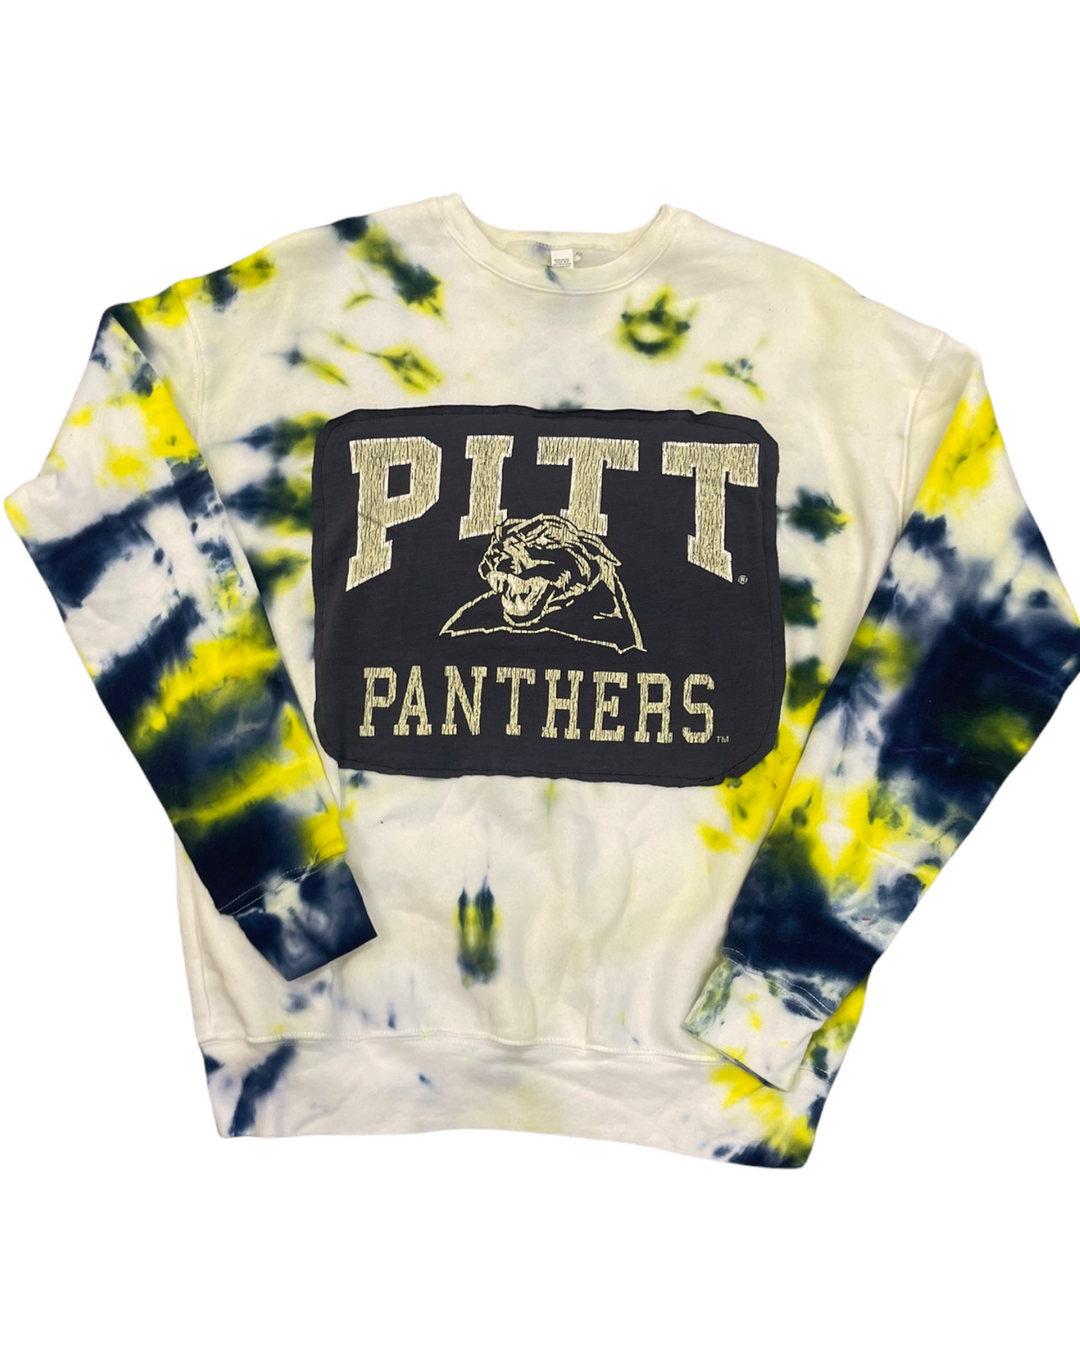 Pitt Patched Tie Dye Sweatshirt